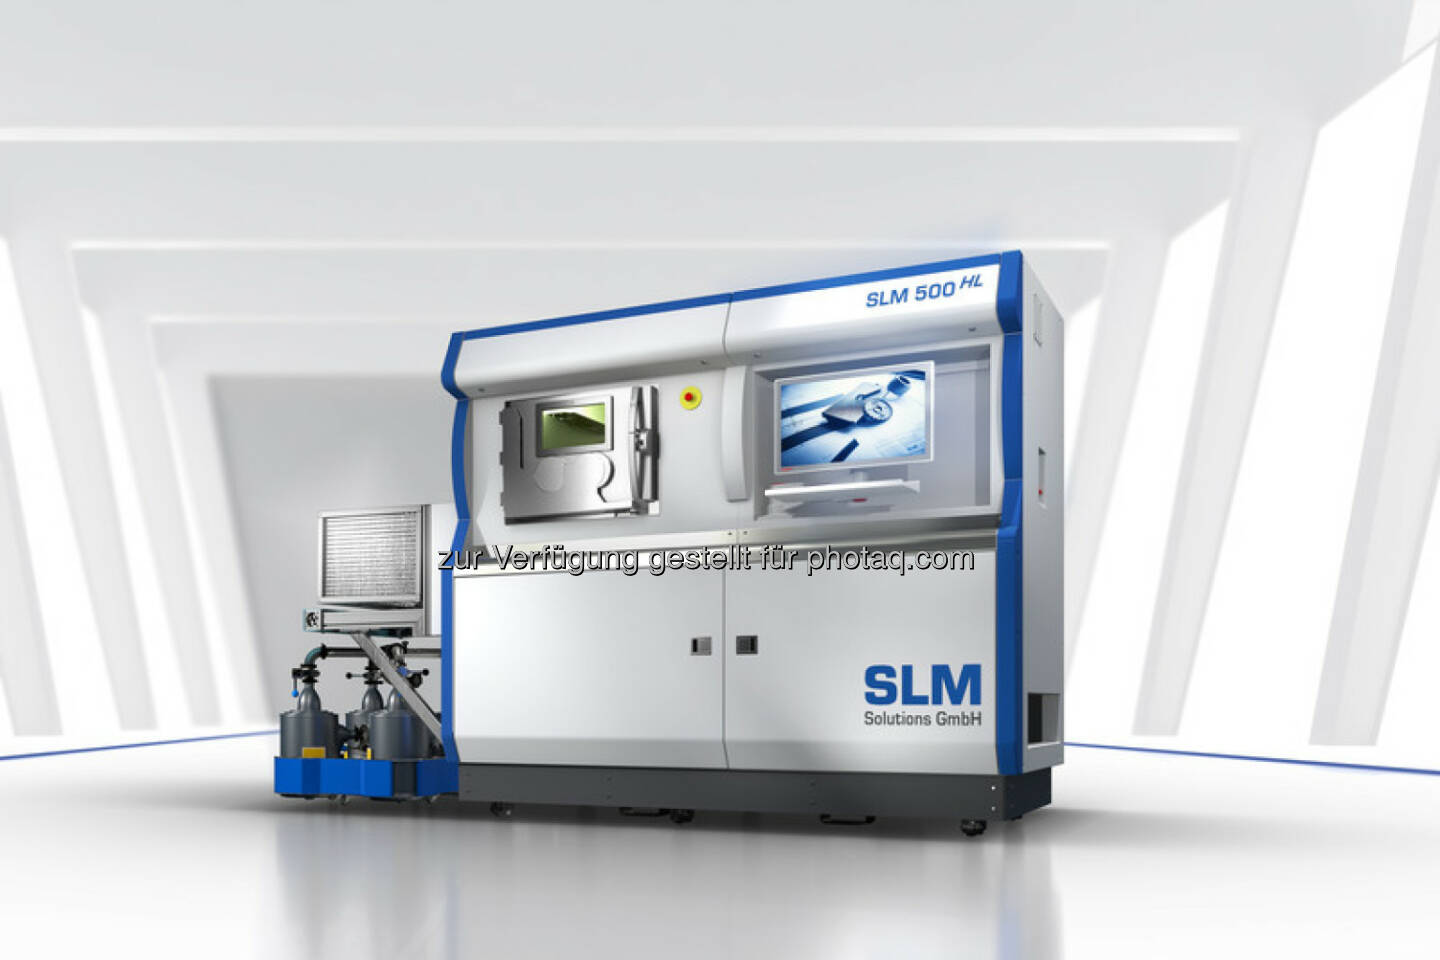 SLM Anlagen (Bild: SLM Solutions https://slm-solutions.de/presseportal/bildmaterial-slm-anlagen )